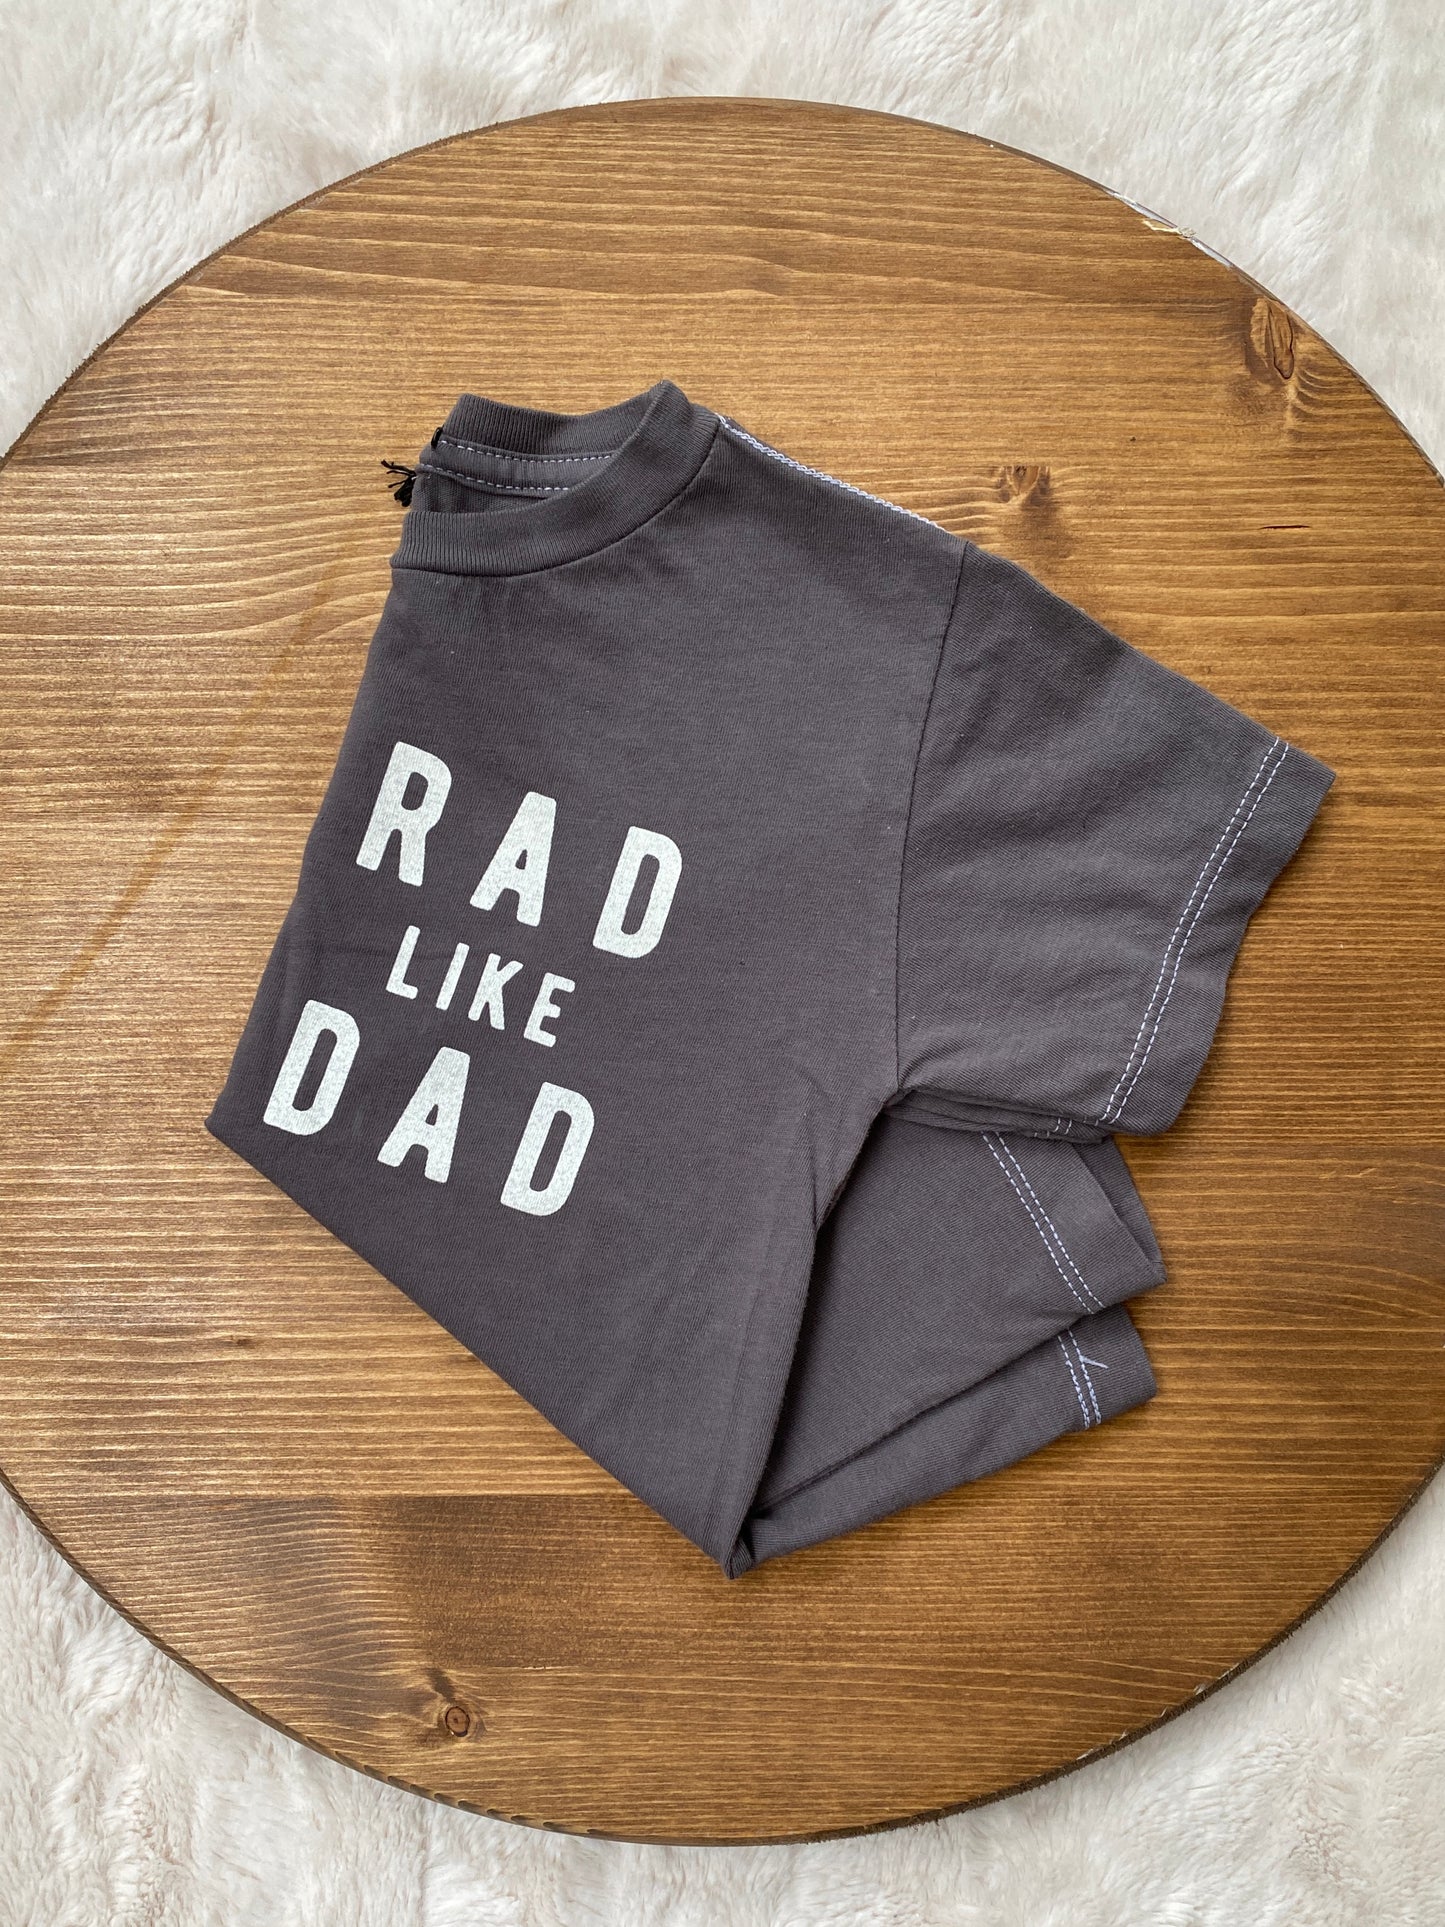 Rad Like Dad - Toddler/Youth Tee